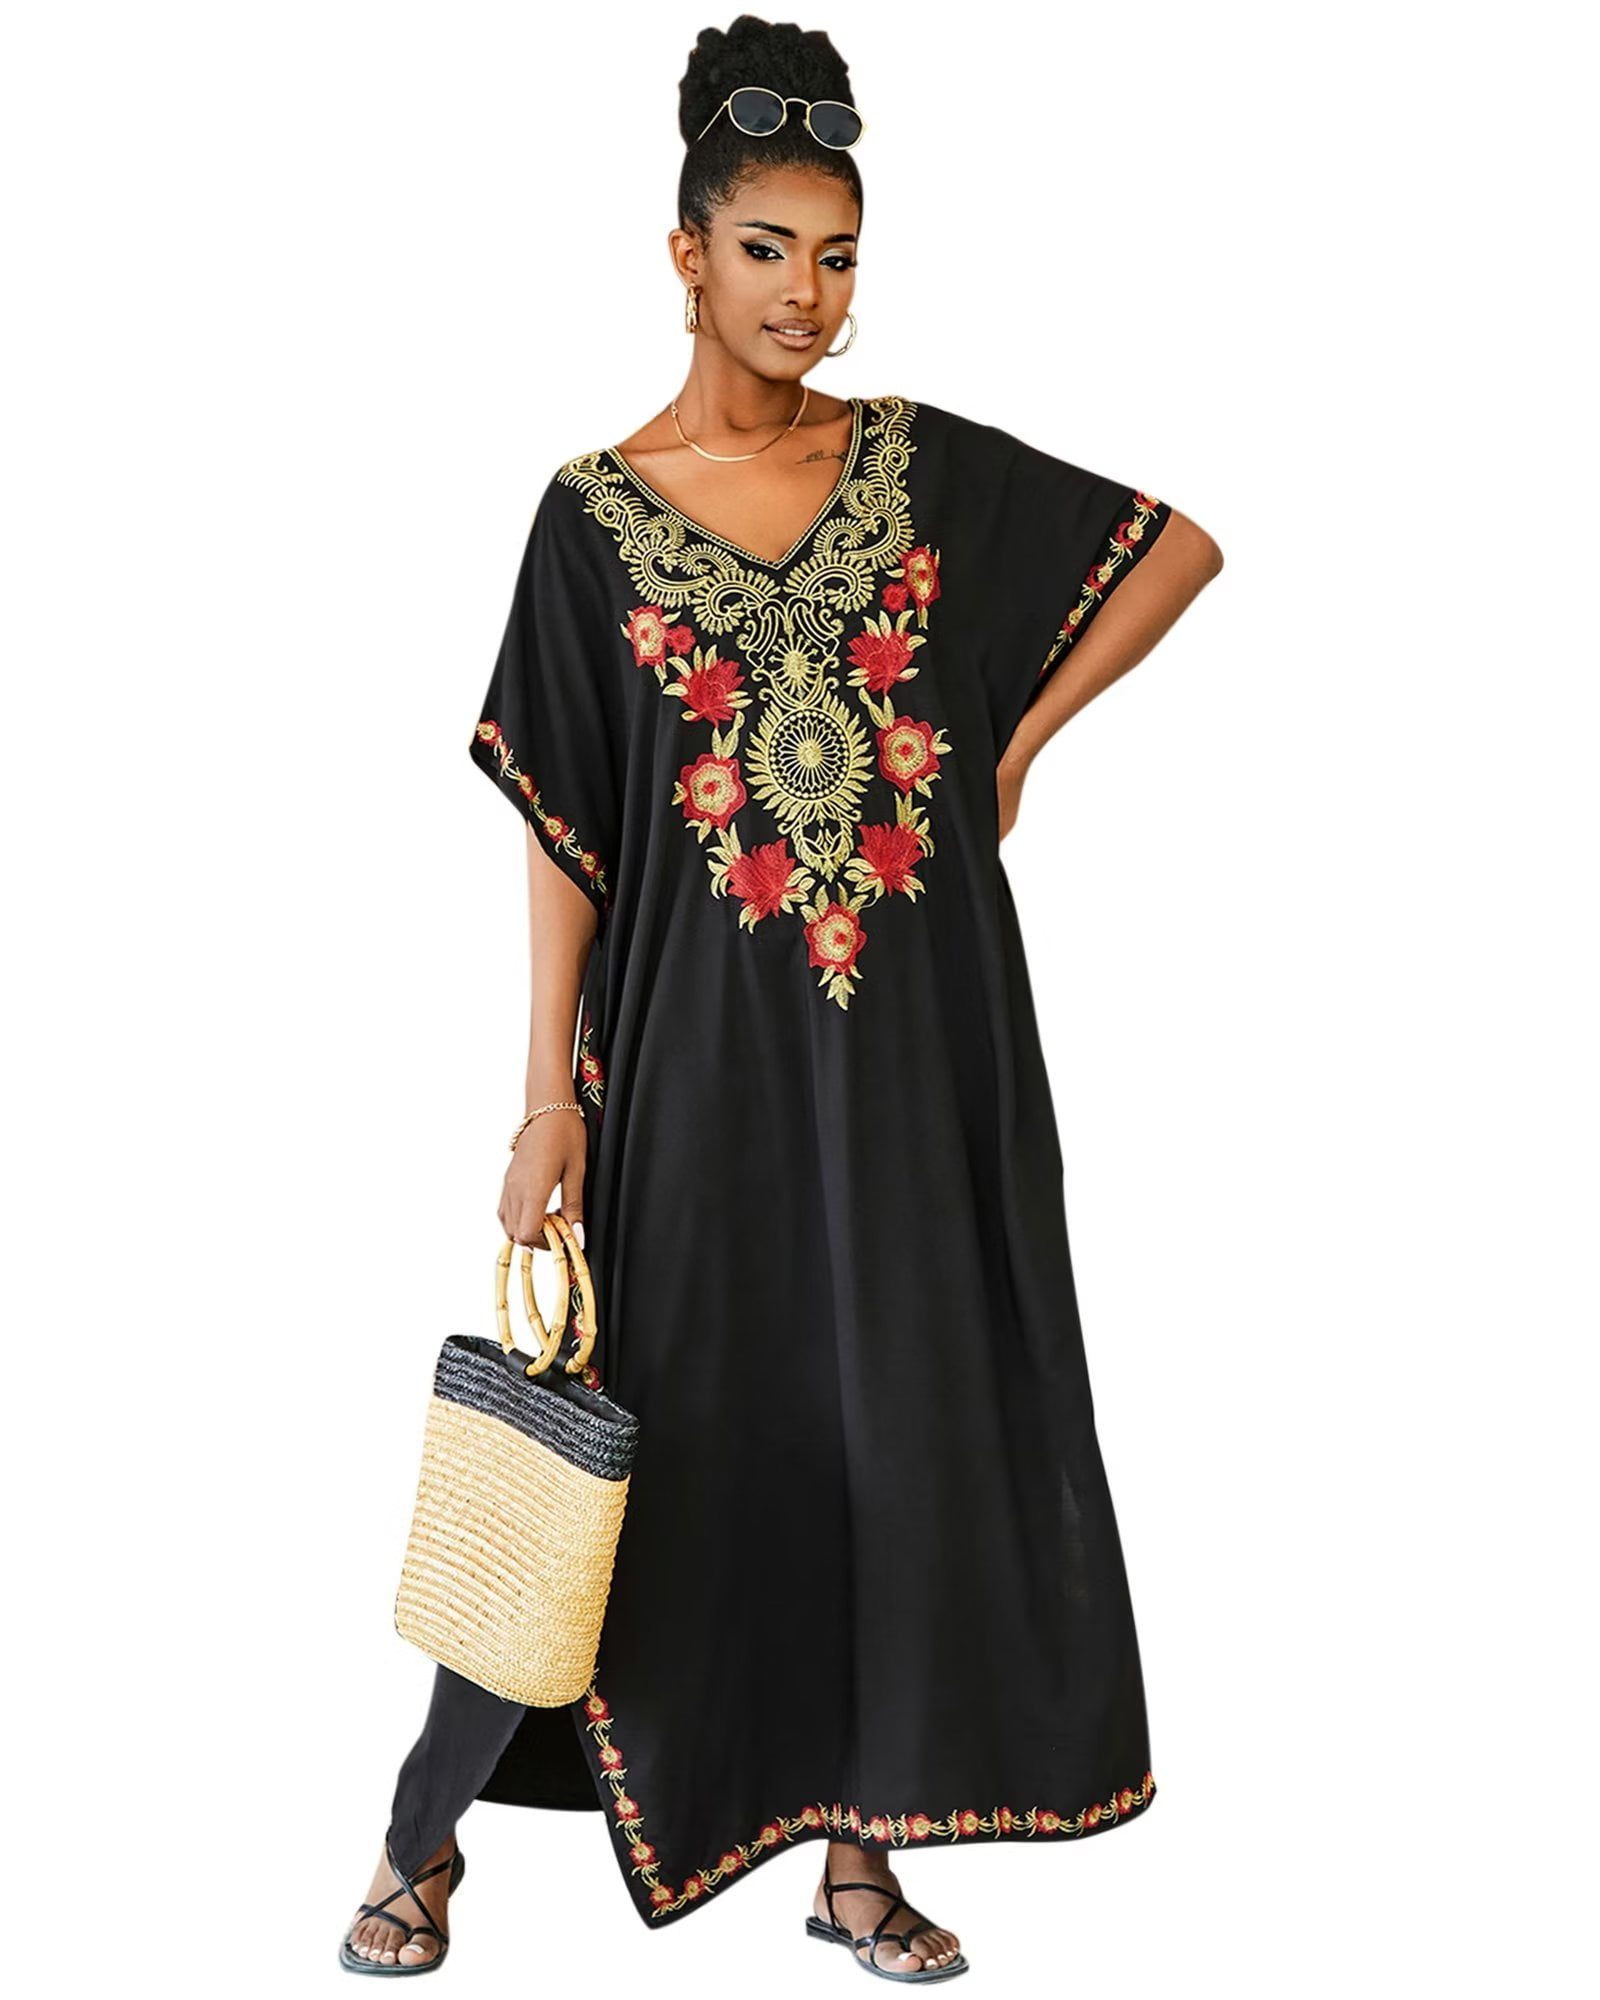 Edolynsa Bohemian Kaftan Dress Floral Embroidered Black Casual Dress ...